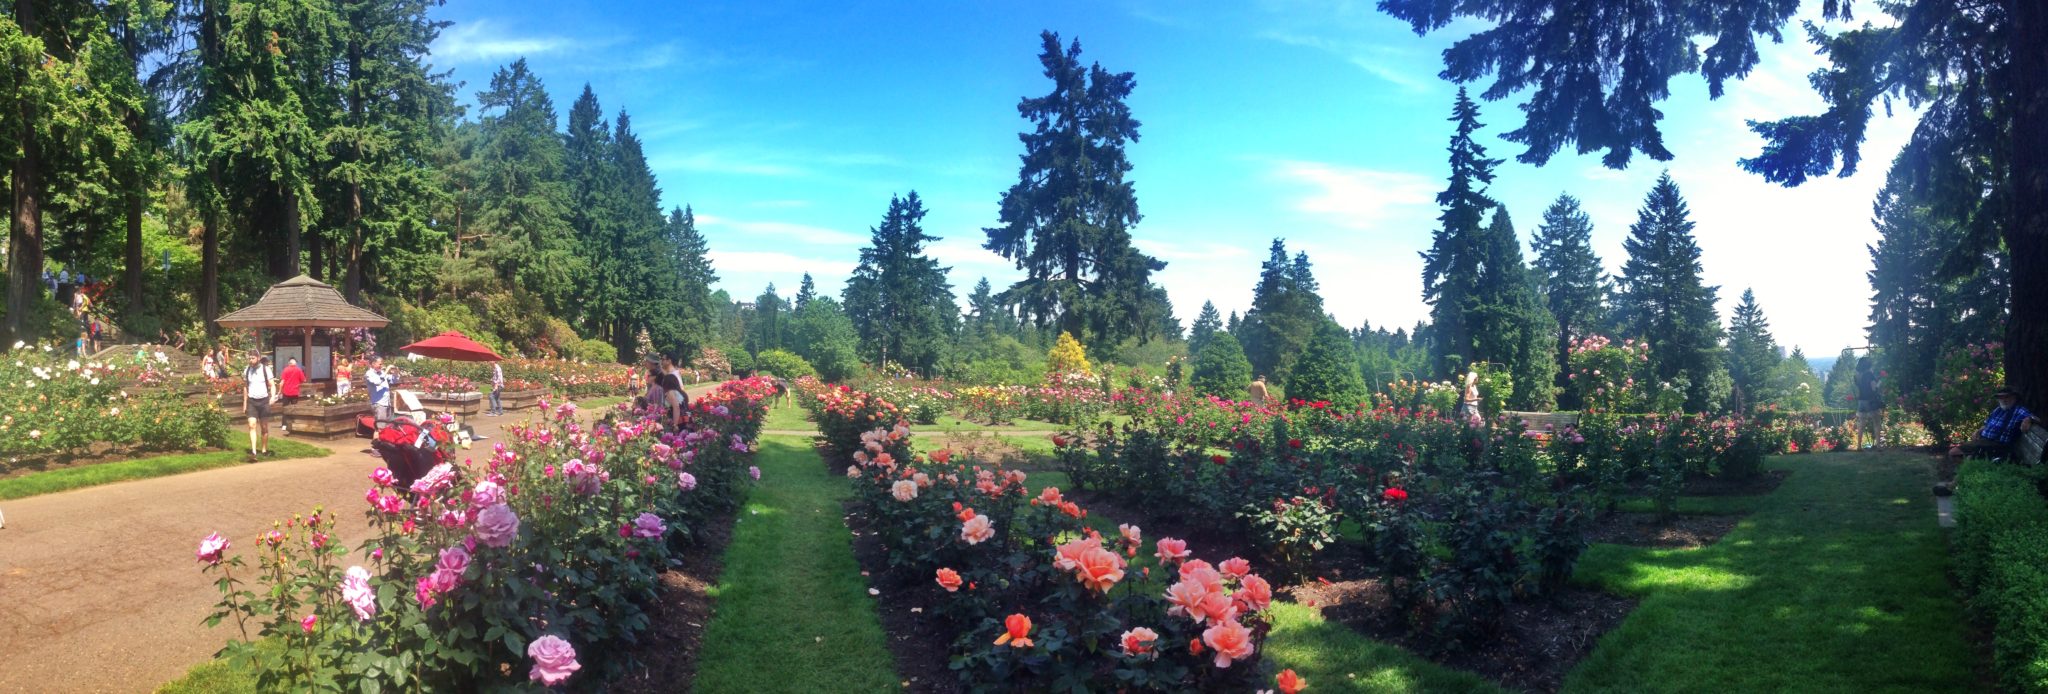 International Rose Test Garden, Washington Park, Portland, Oregon